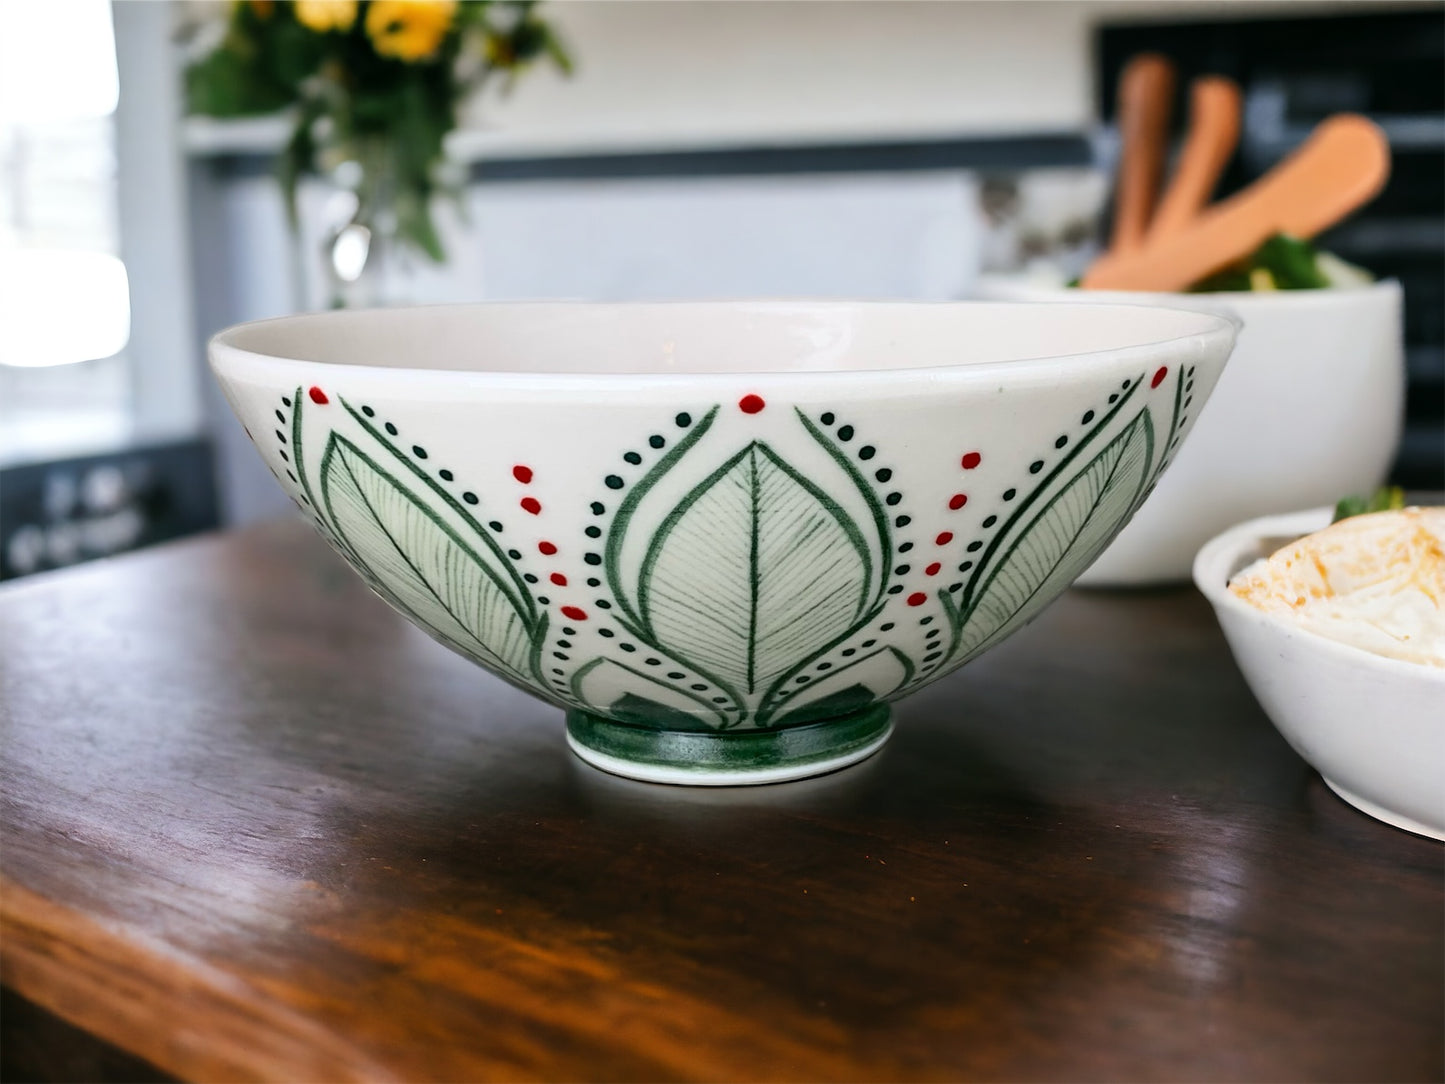 Medium porcelain bowl with hand-painted green mandala art